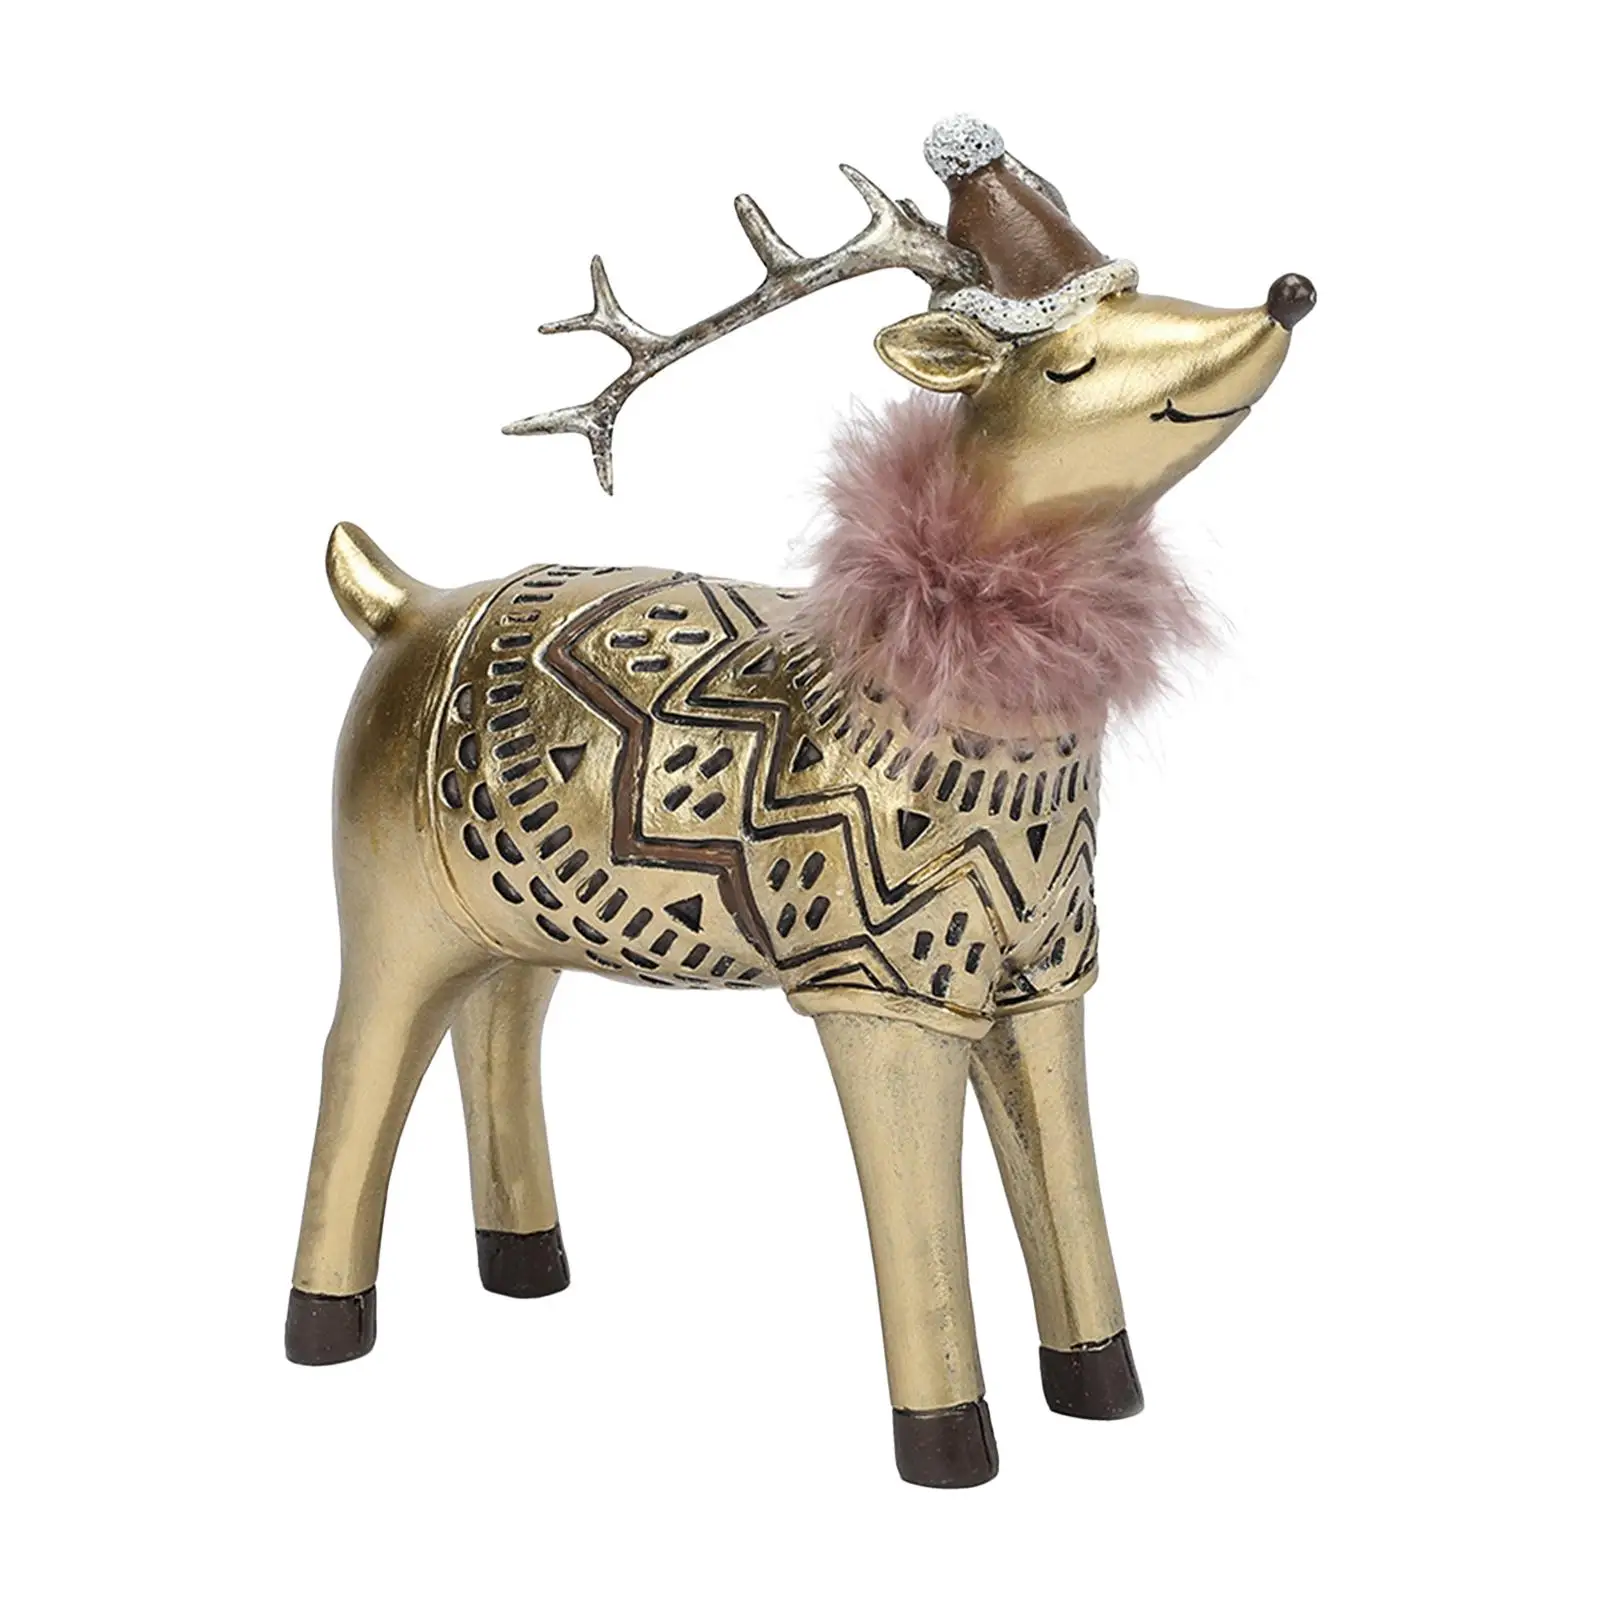 Desktop Ornament Christmas Ornament Decorative Deer Figurine for Birthday